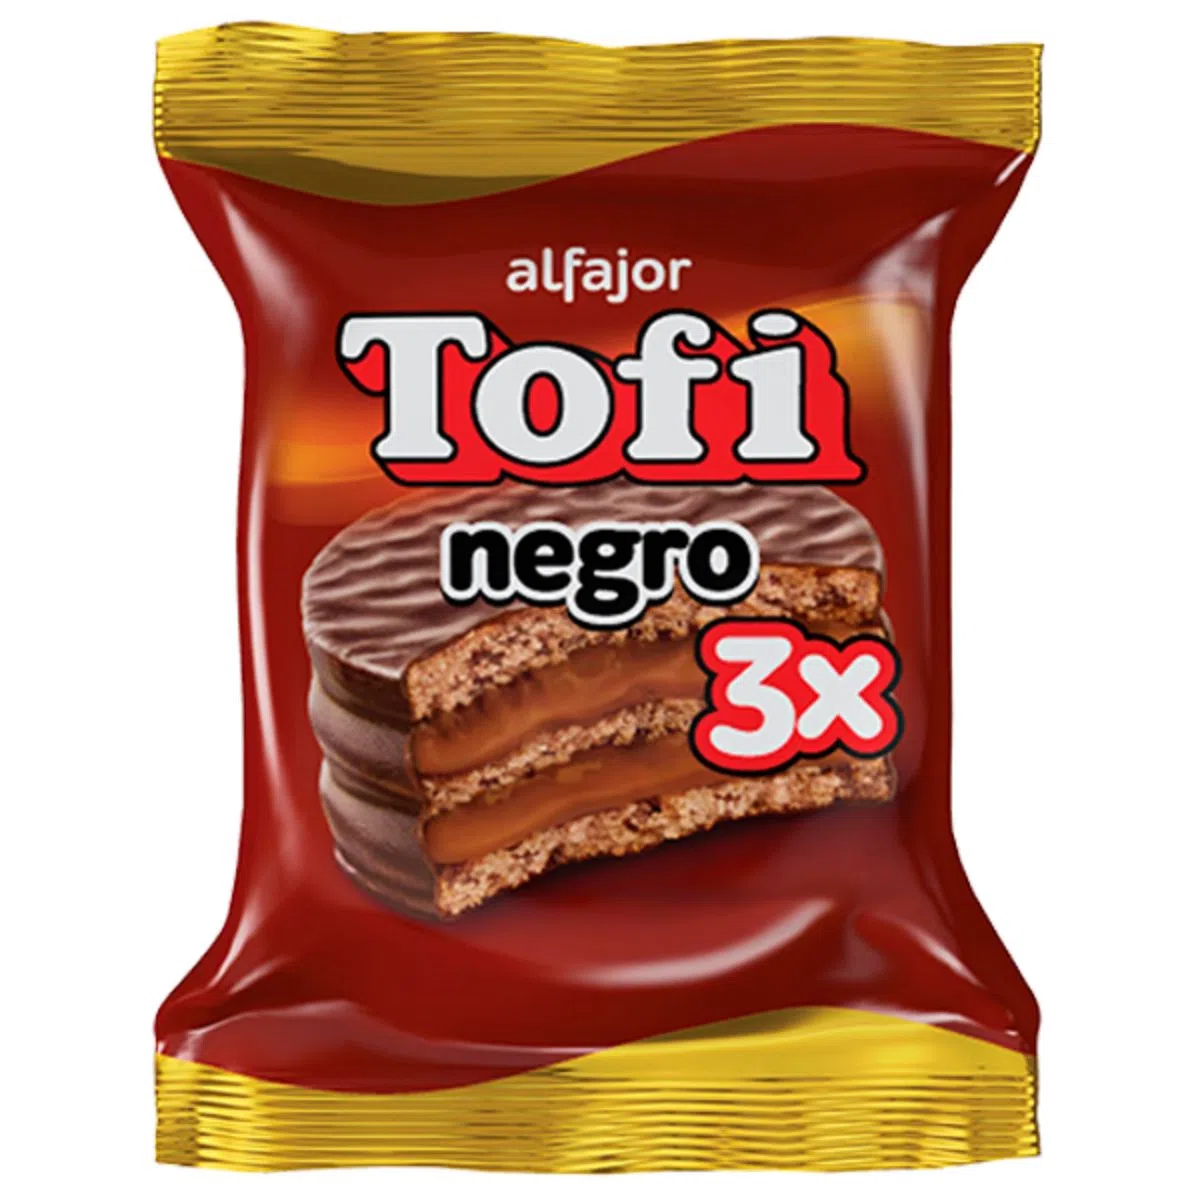 Alfajor Tofi Negro 3x 73g